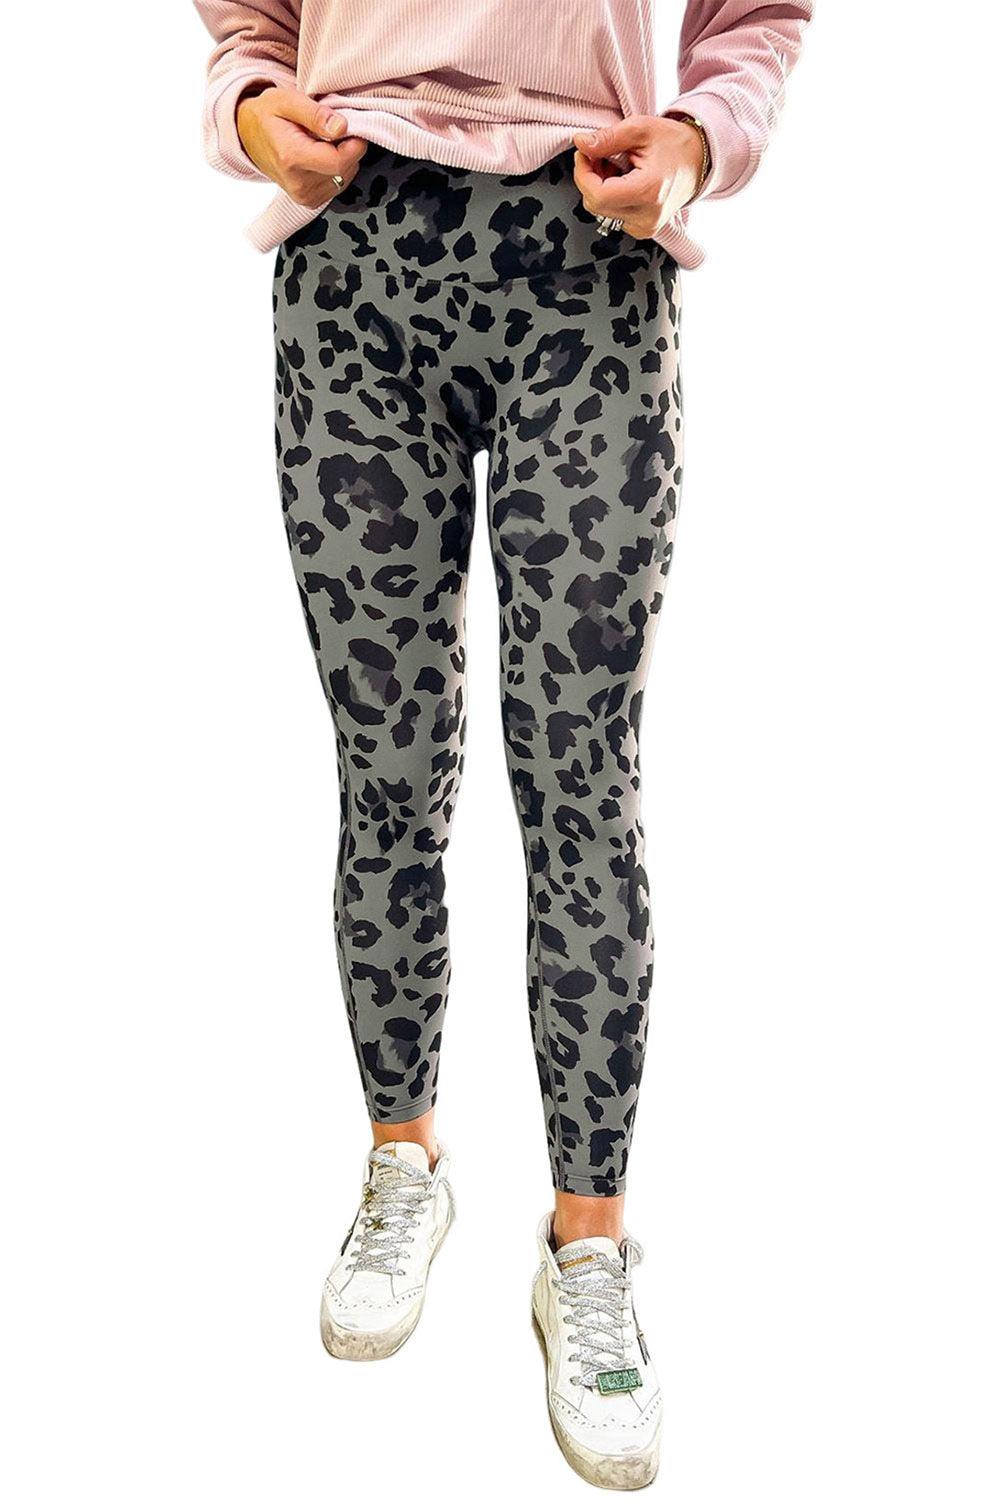 Grey Leopard Print Casual High Waist Leggings - Vesteeto